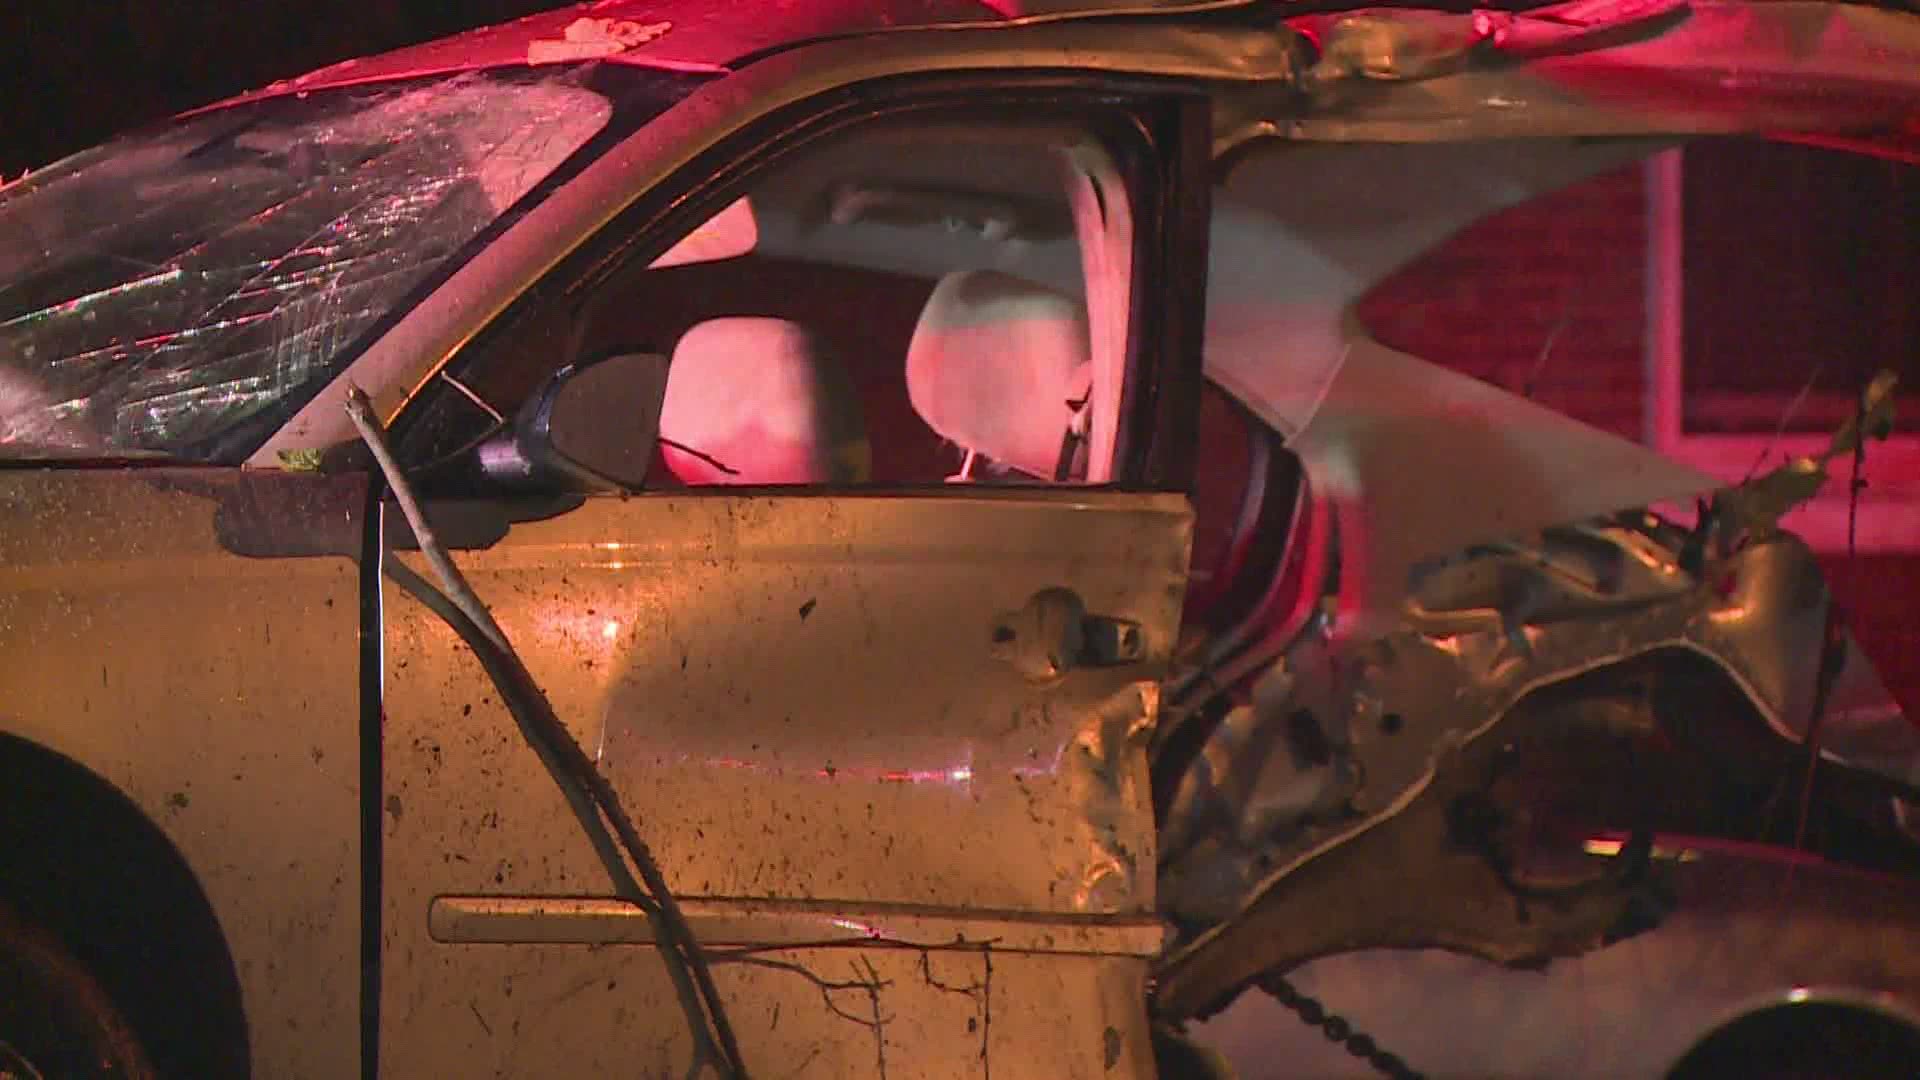 Car split in half after crash in Grand Rapids